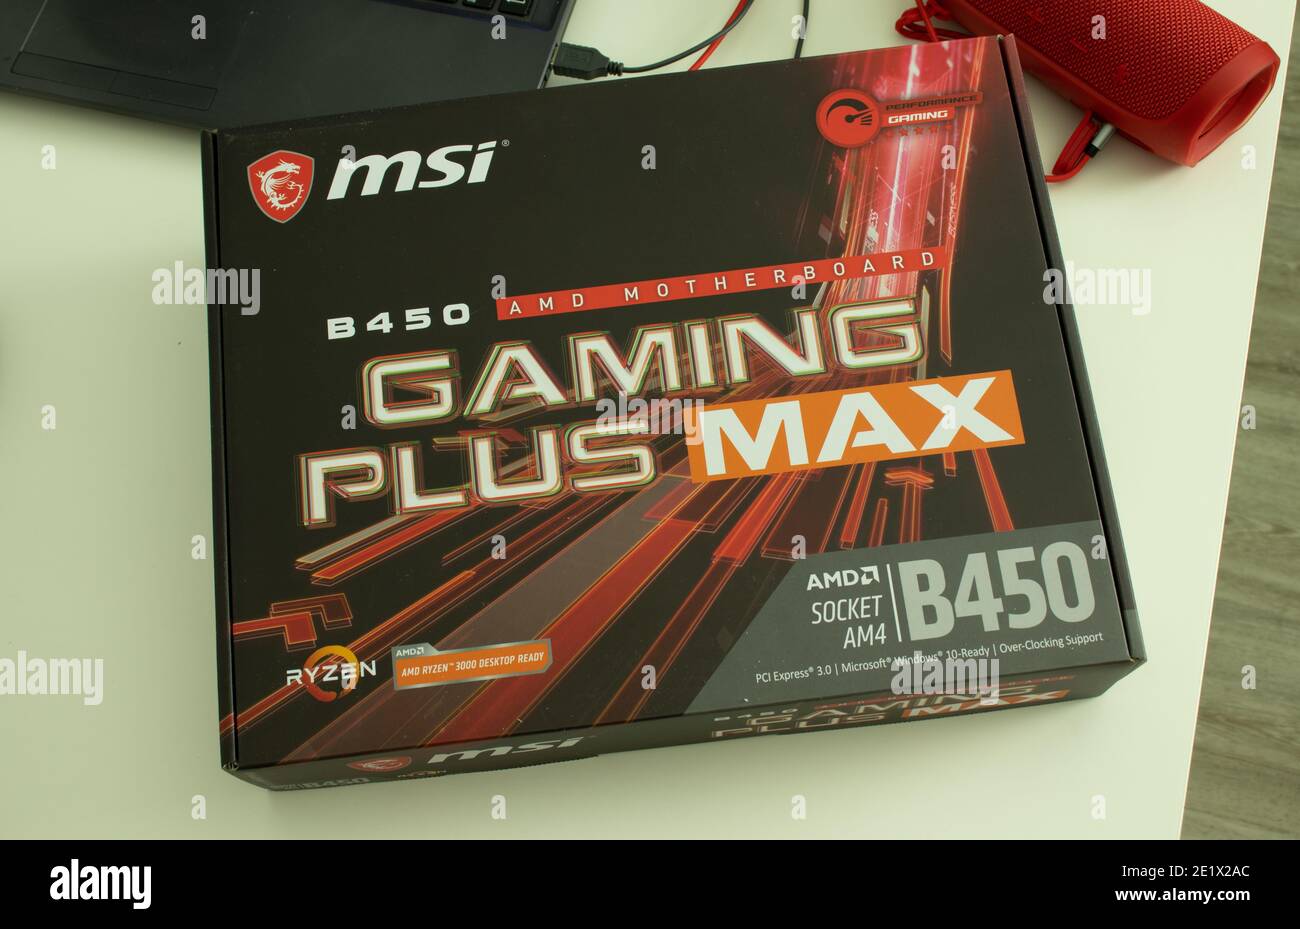 Moskau, Russland - 5. Dezember 2020: MSI B450 AMD Mainboard Gaming Plus Max für Ryzen AM4 Sockel, illustrative Editorial. Stockfoto